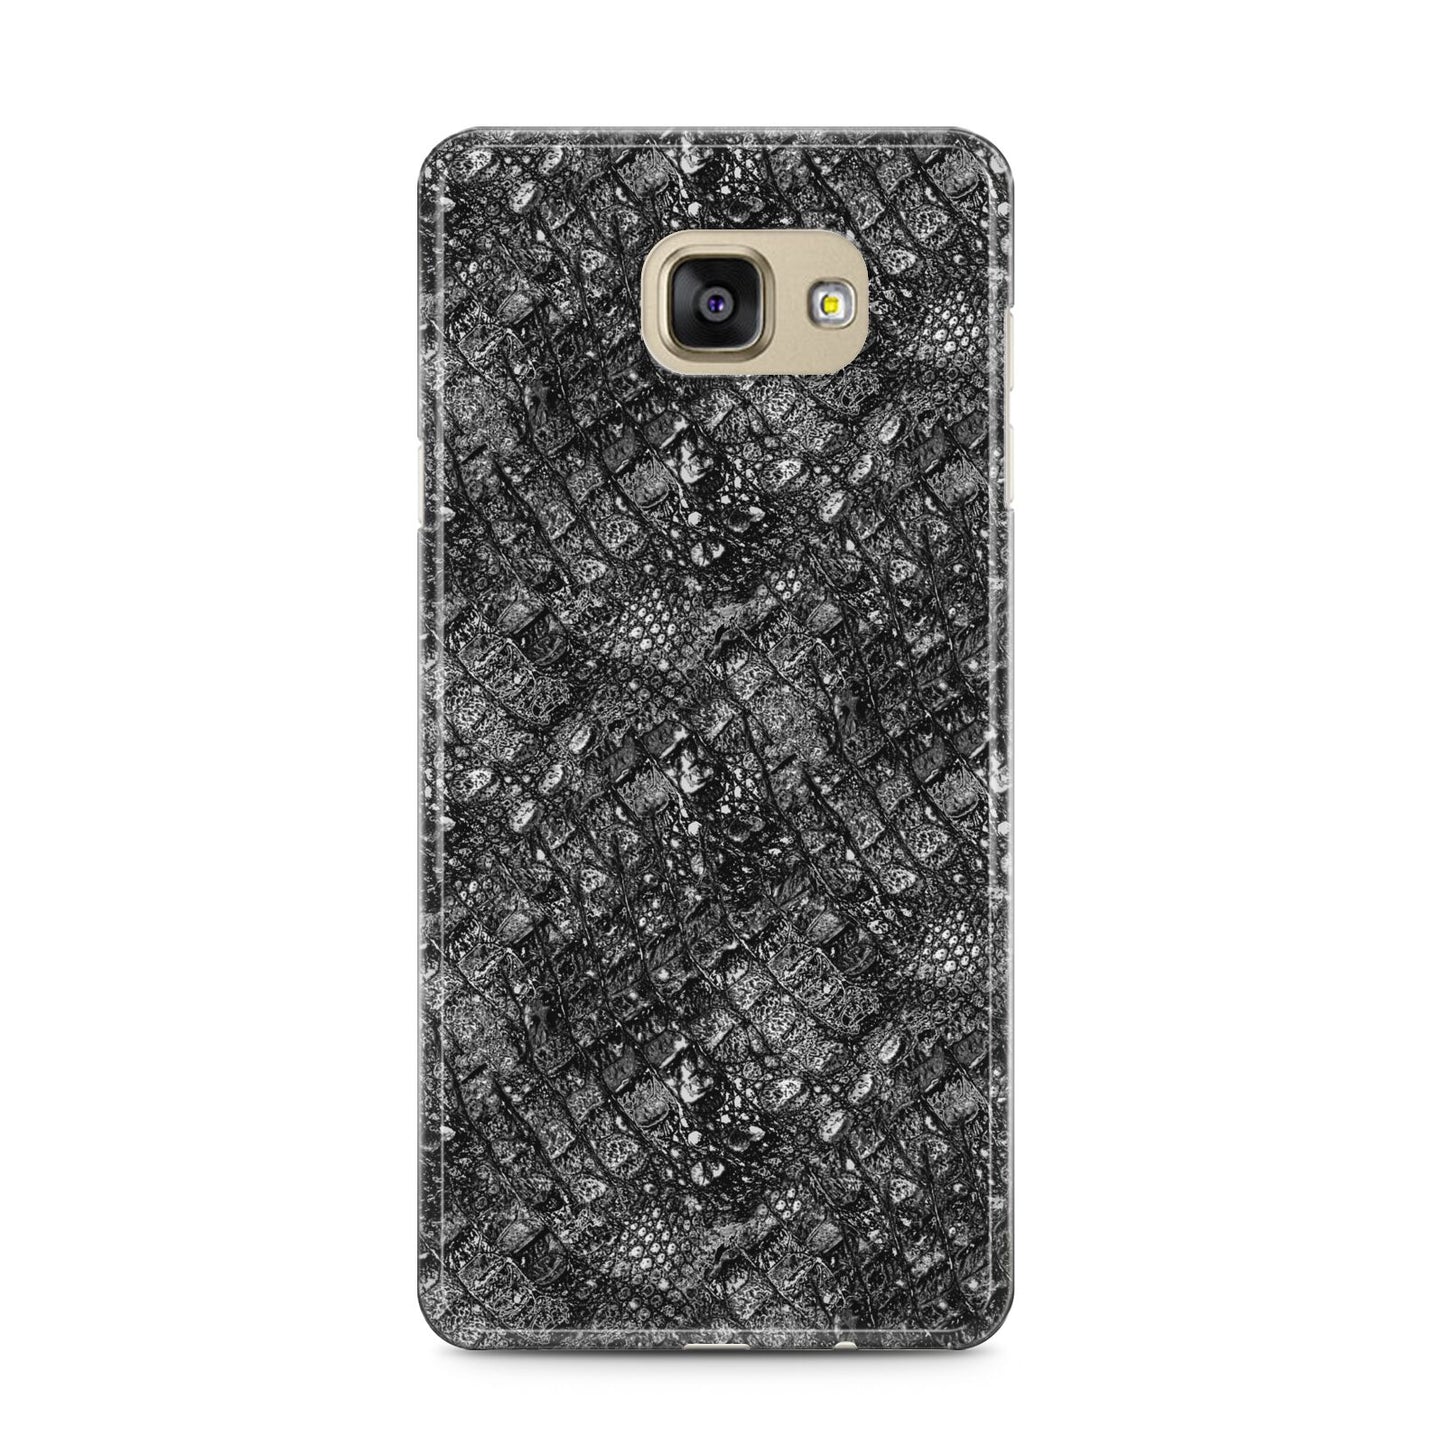 Snakeskin Design Samsung Galaxy A5 2016 Case on gold phone